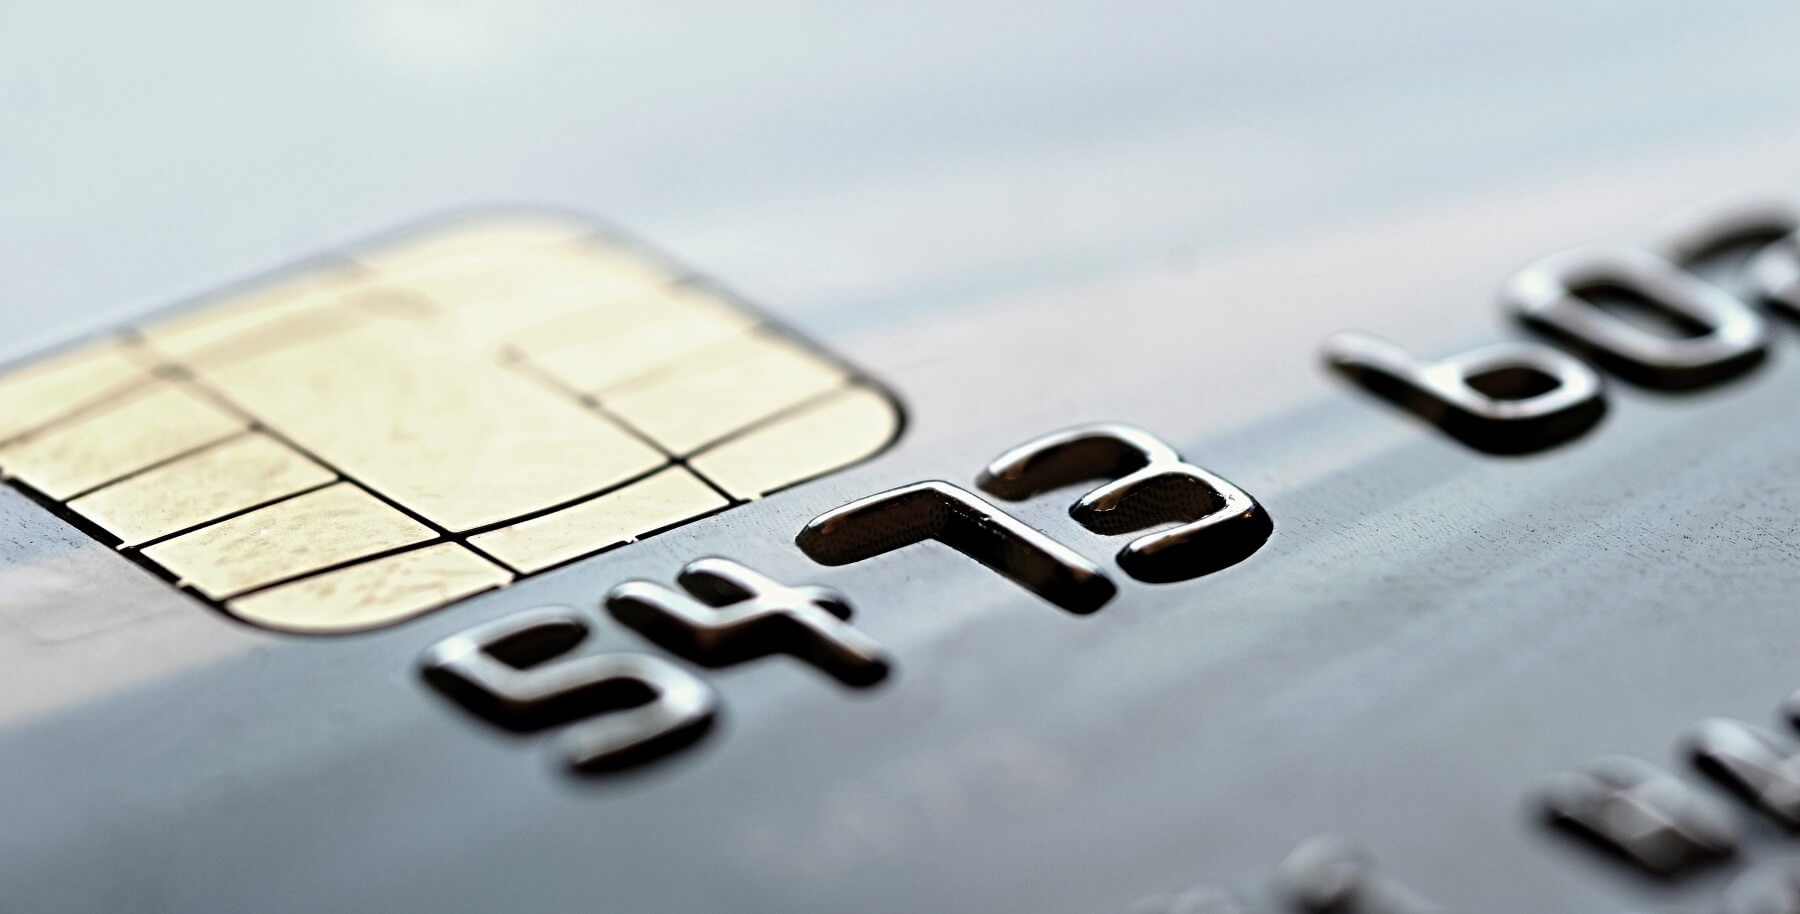 Chip and Pin/EMV Credit Card